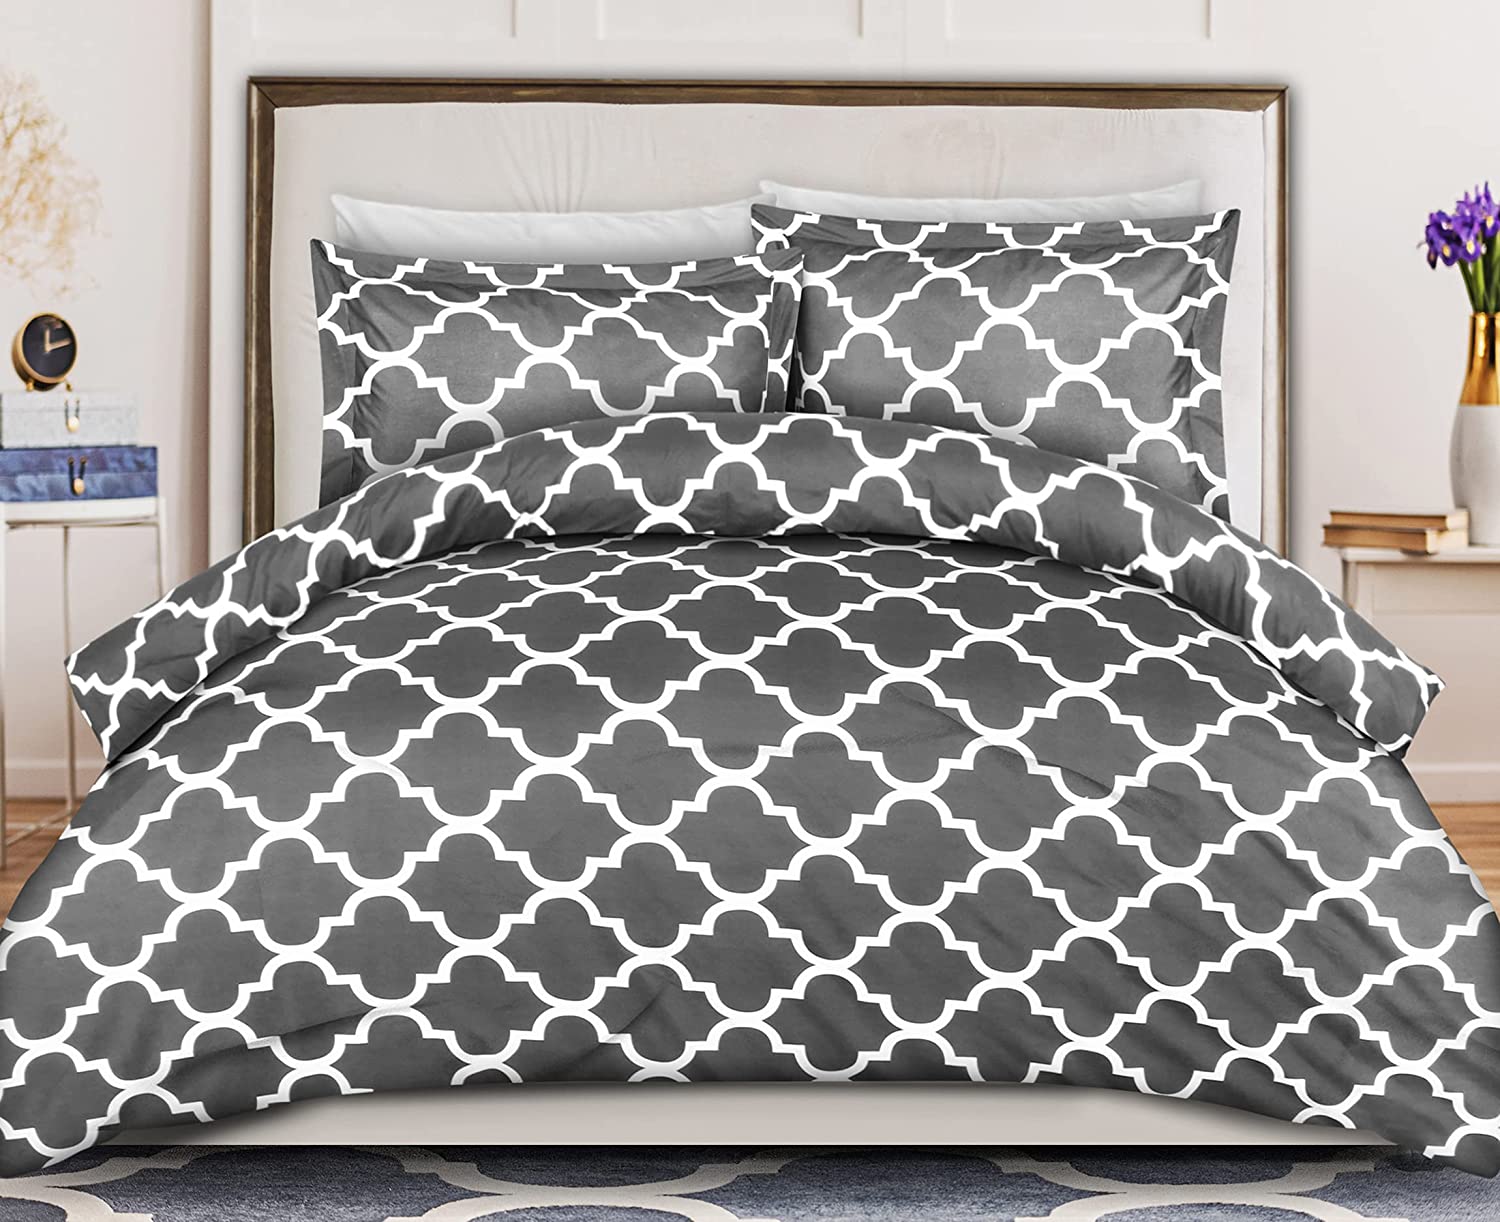 Utopia Bedding Printed Comforter Set (Queen, Grey) with 2 Pillow Shams -  Luxurio